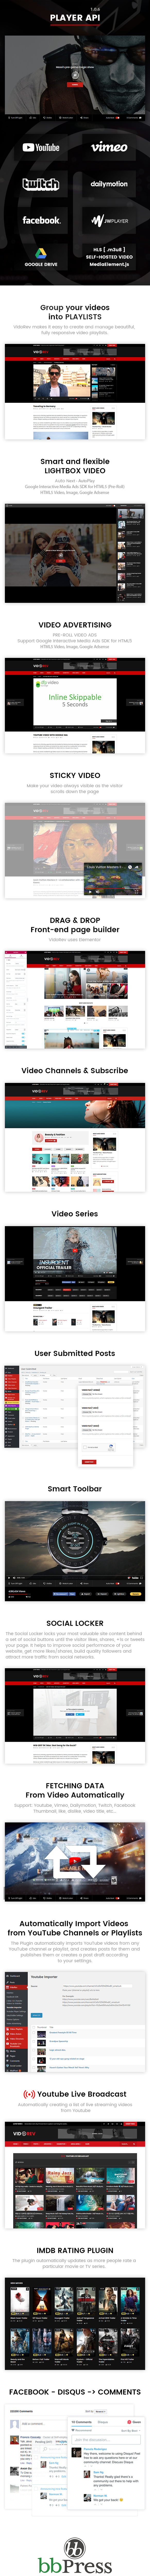 VidoRev - Video WordPress Theme - 12